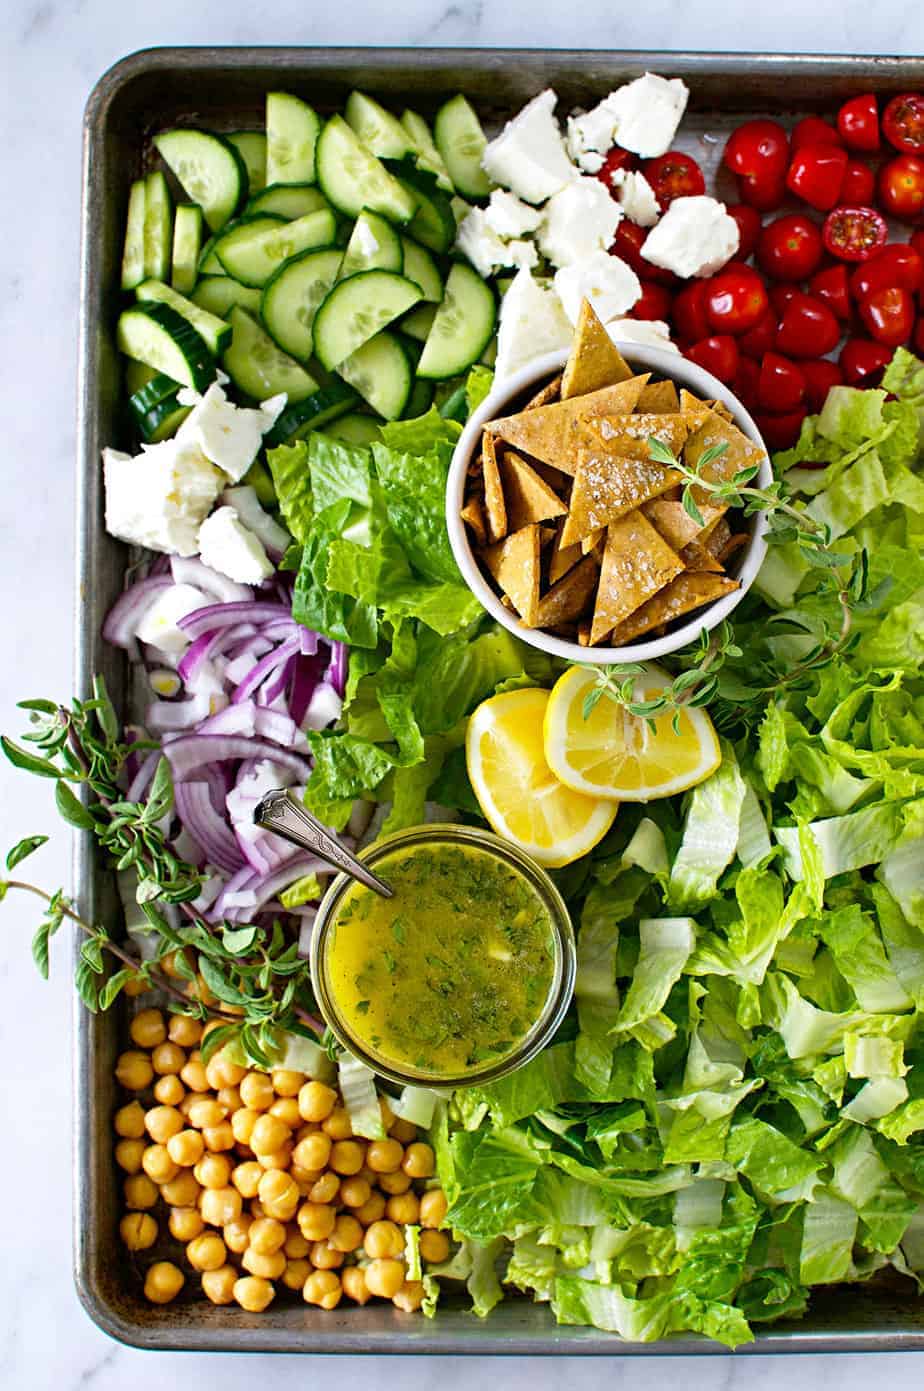 Gluten-Free Fattoush Salad with Za'atar Chickpea Crisps recipe (via thepigandquill.com) #vegetarian #greeksalad #mealplanning